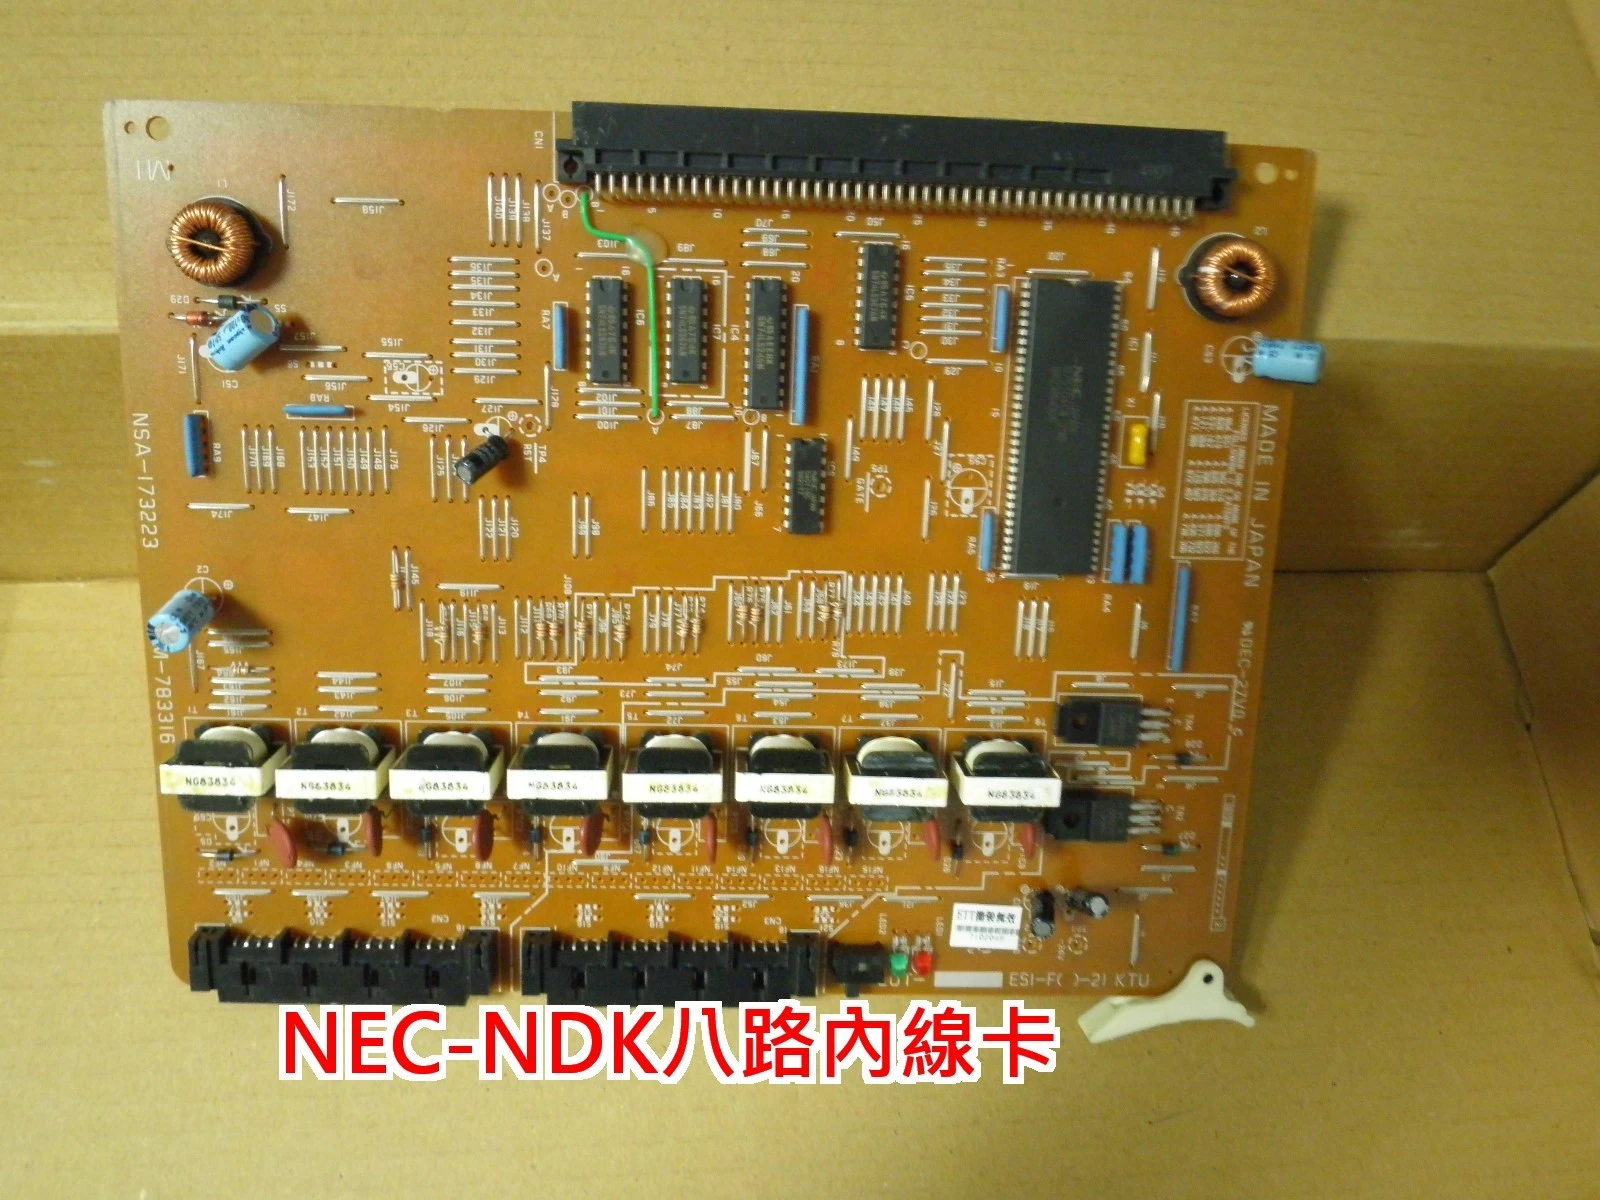 NEC-NDK主機L,M櫃擴充專用機板